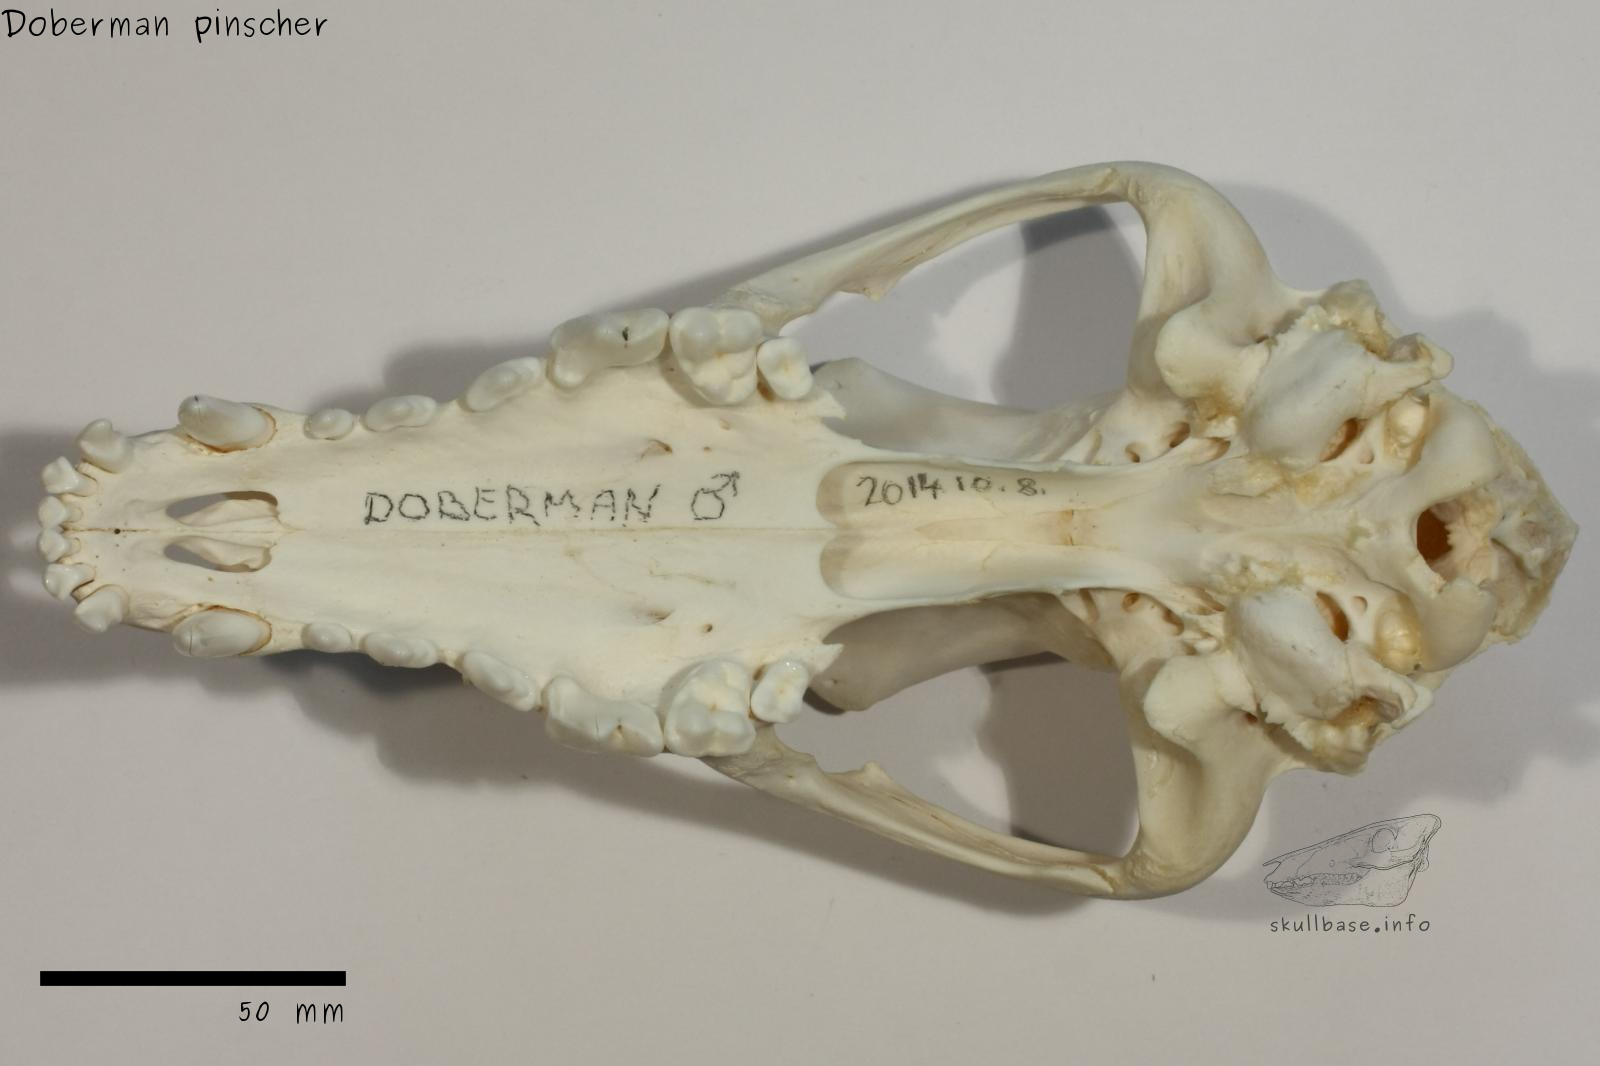 Doberman pinscher (Canis lupus familiaris) skull ventral view